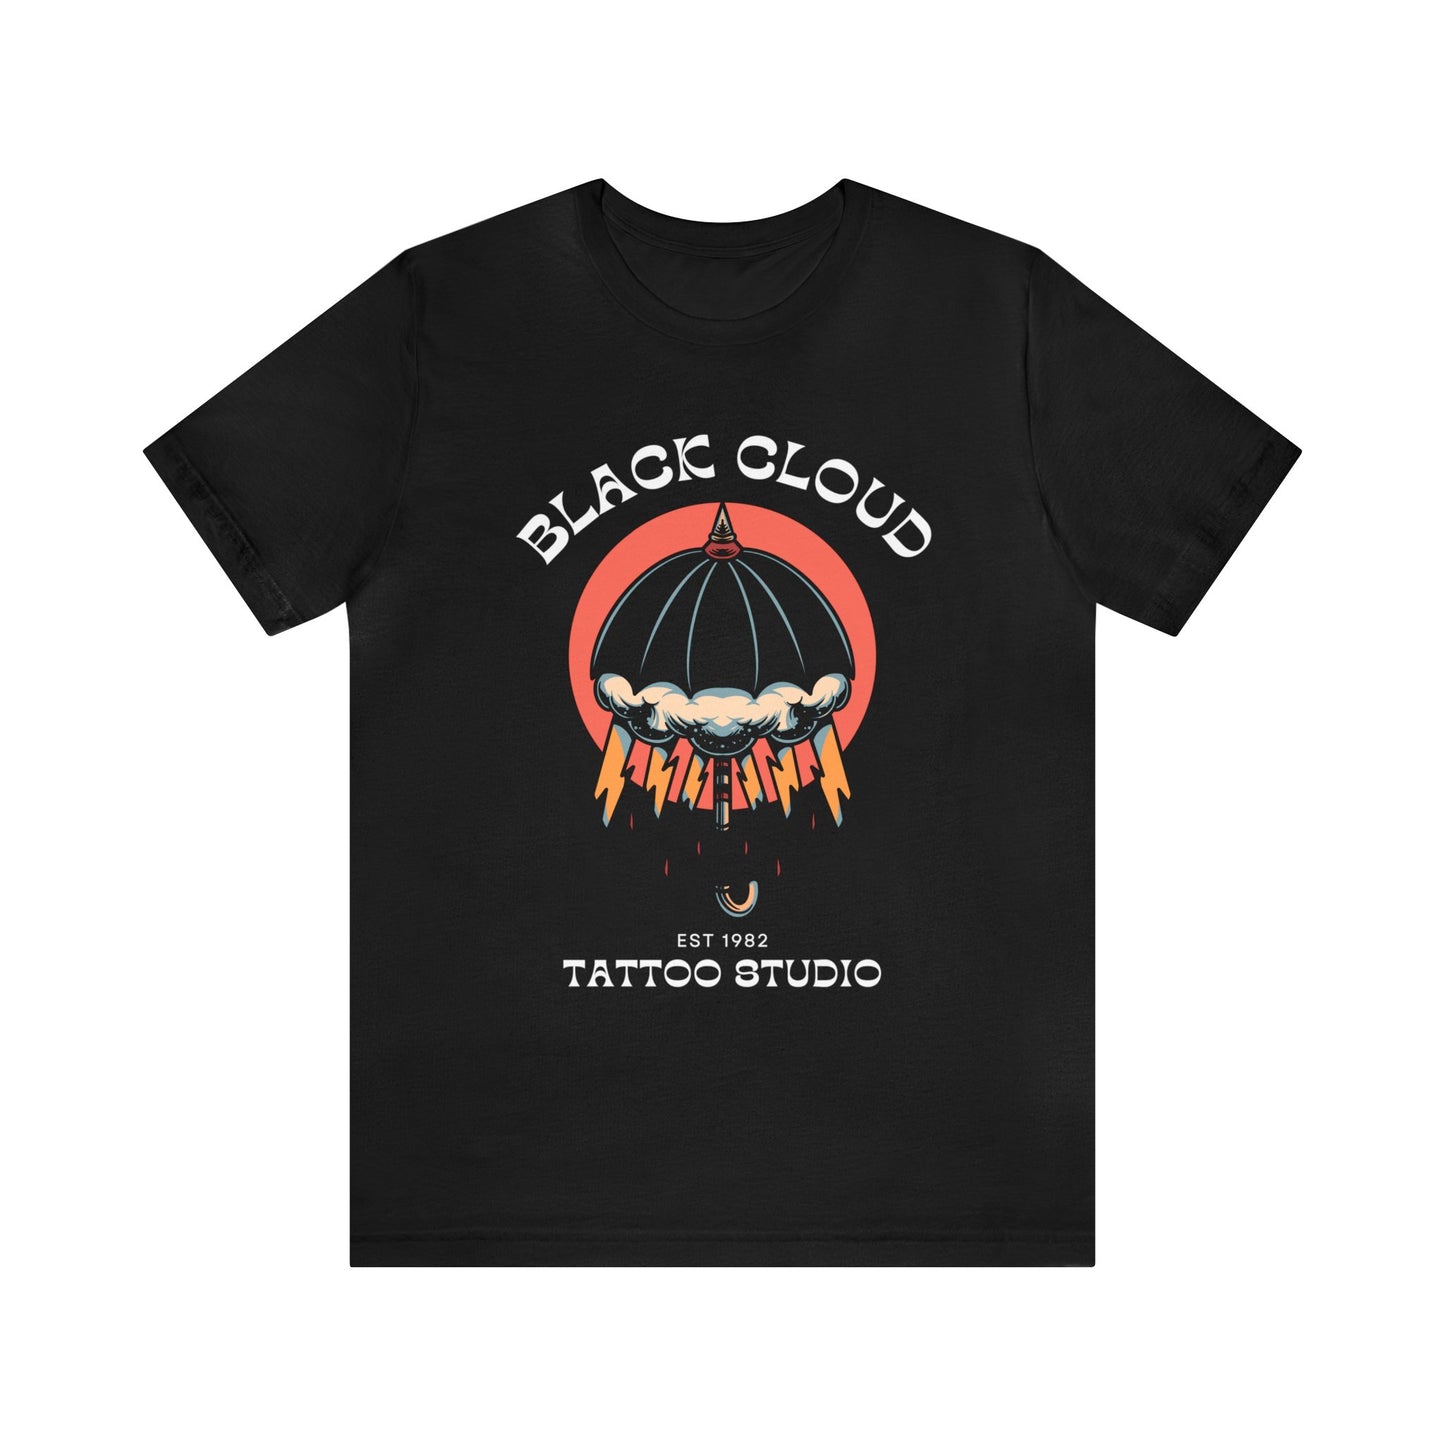 Black Cloud Umbrella Lightning Bolt Tattoo T-shirt / Unisex Vintage Old School Traditional Tattoo Tee Shirt / Punk Rock Clothing Tshirt - Foxlark Crystal Jewelry